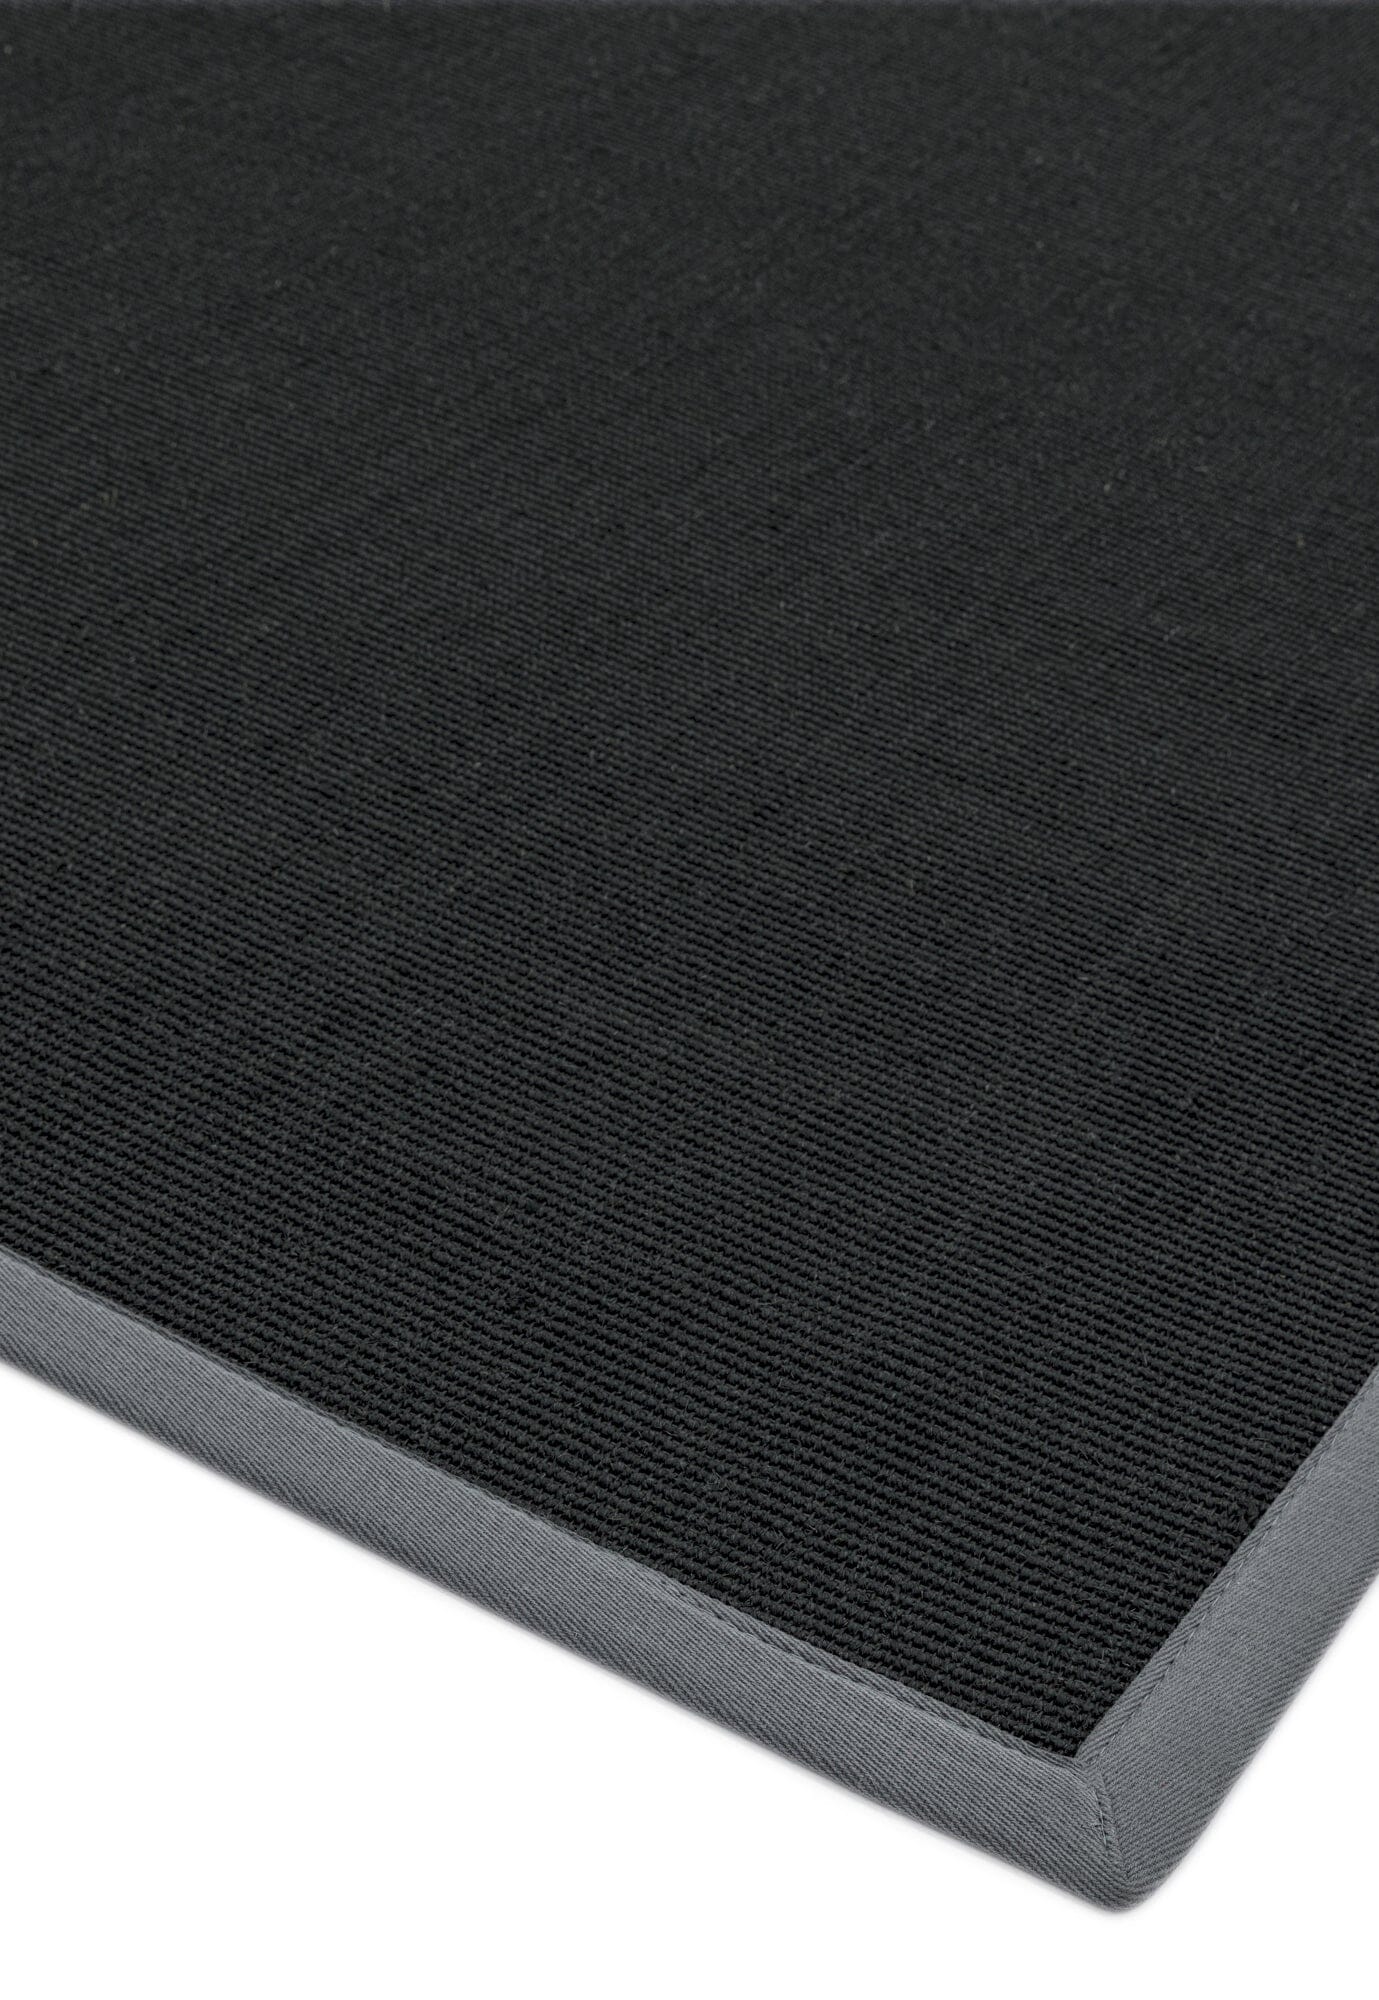  Asiatic Carpets-Asiatic Carpets Sisal Machine Woven Rug Black/Grey - 200 x 300cm-Black 917 